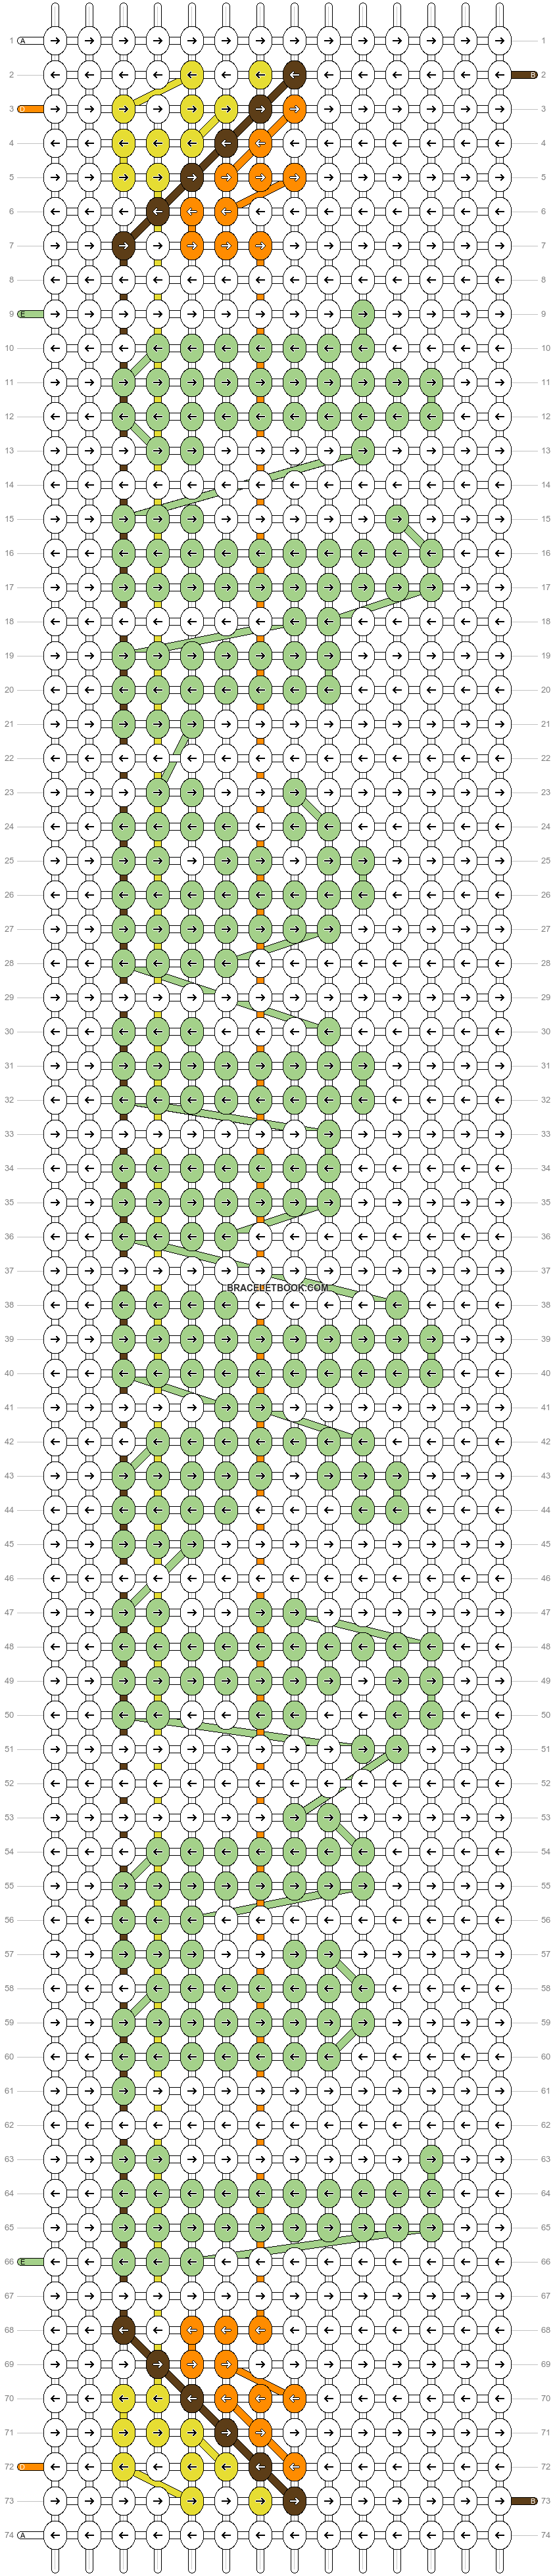 Alpha pattern #59876 variation #106388 pattern